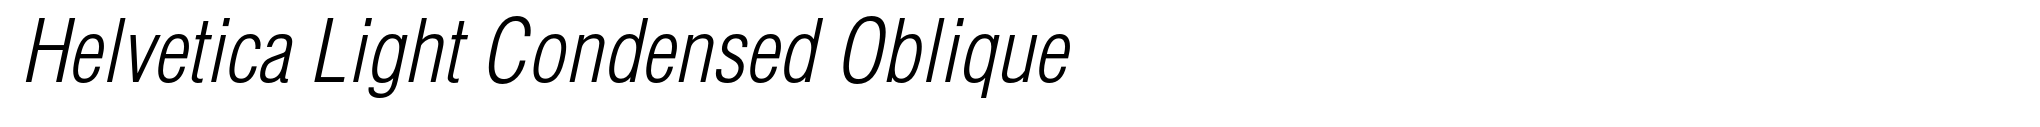 Helvetica Light Condensed Oblique image